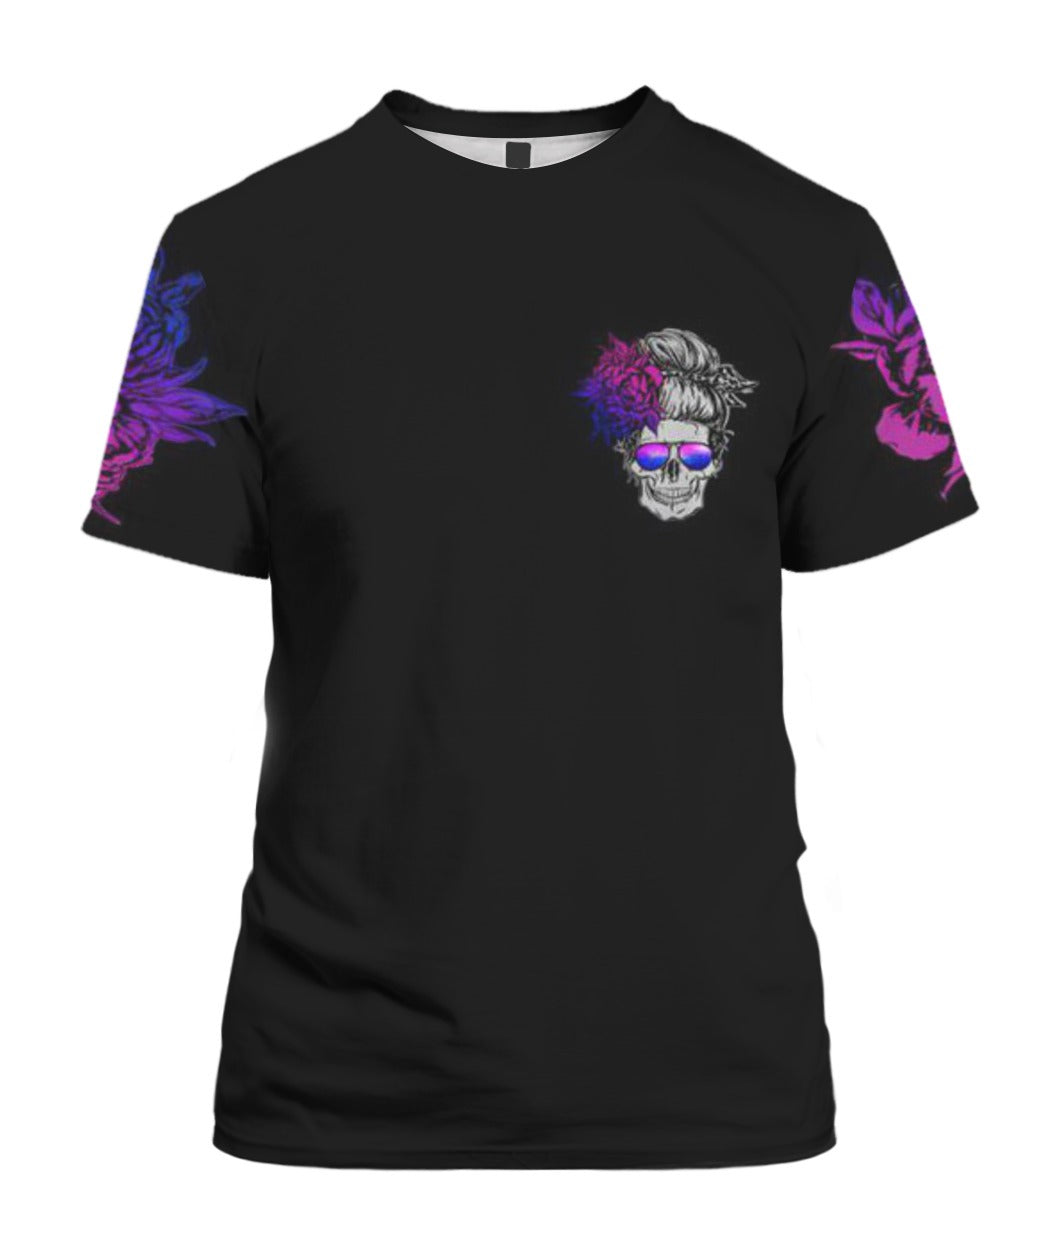 Bi Till I Die 3D Full Print Tshirt For Bisexual Friend/ Bi Sexual Tee Shirt/ Pride Gift For Bi